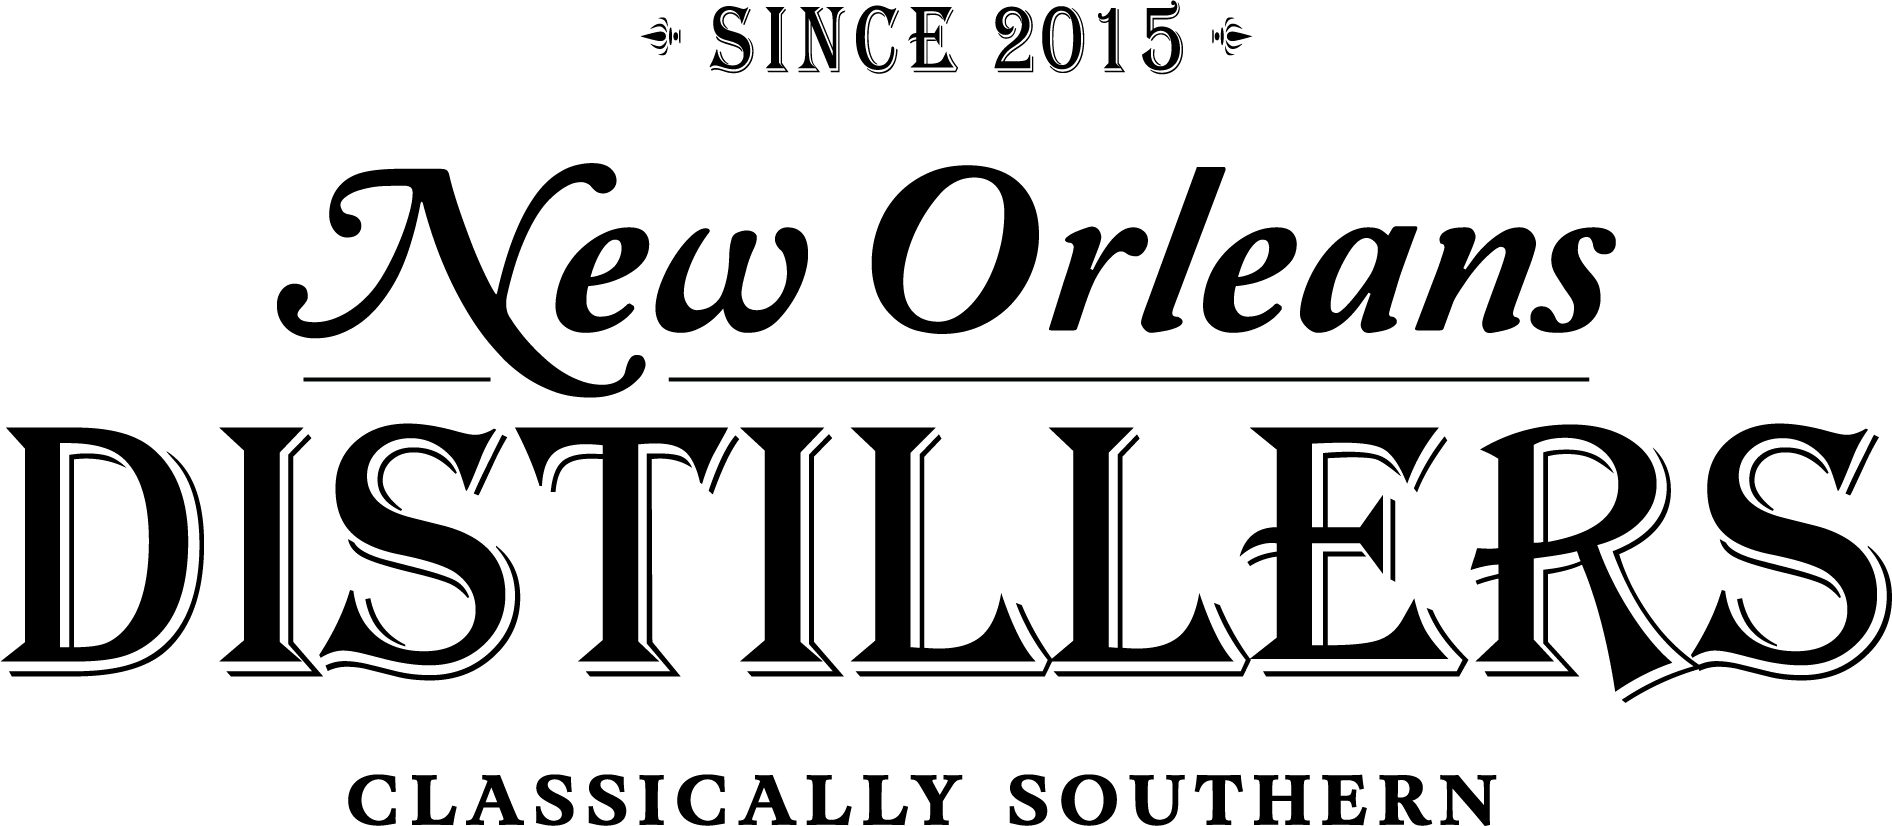 New Orleans Distillers 